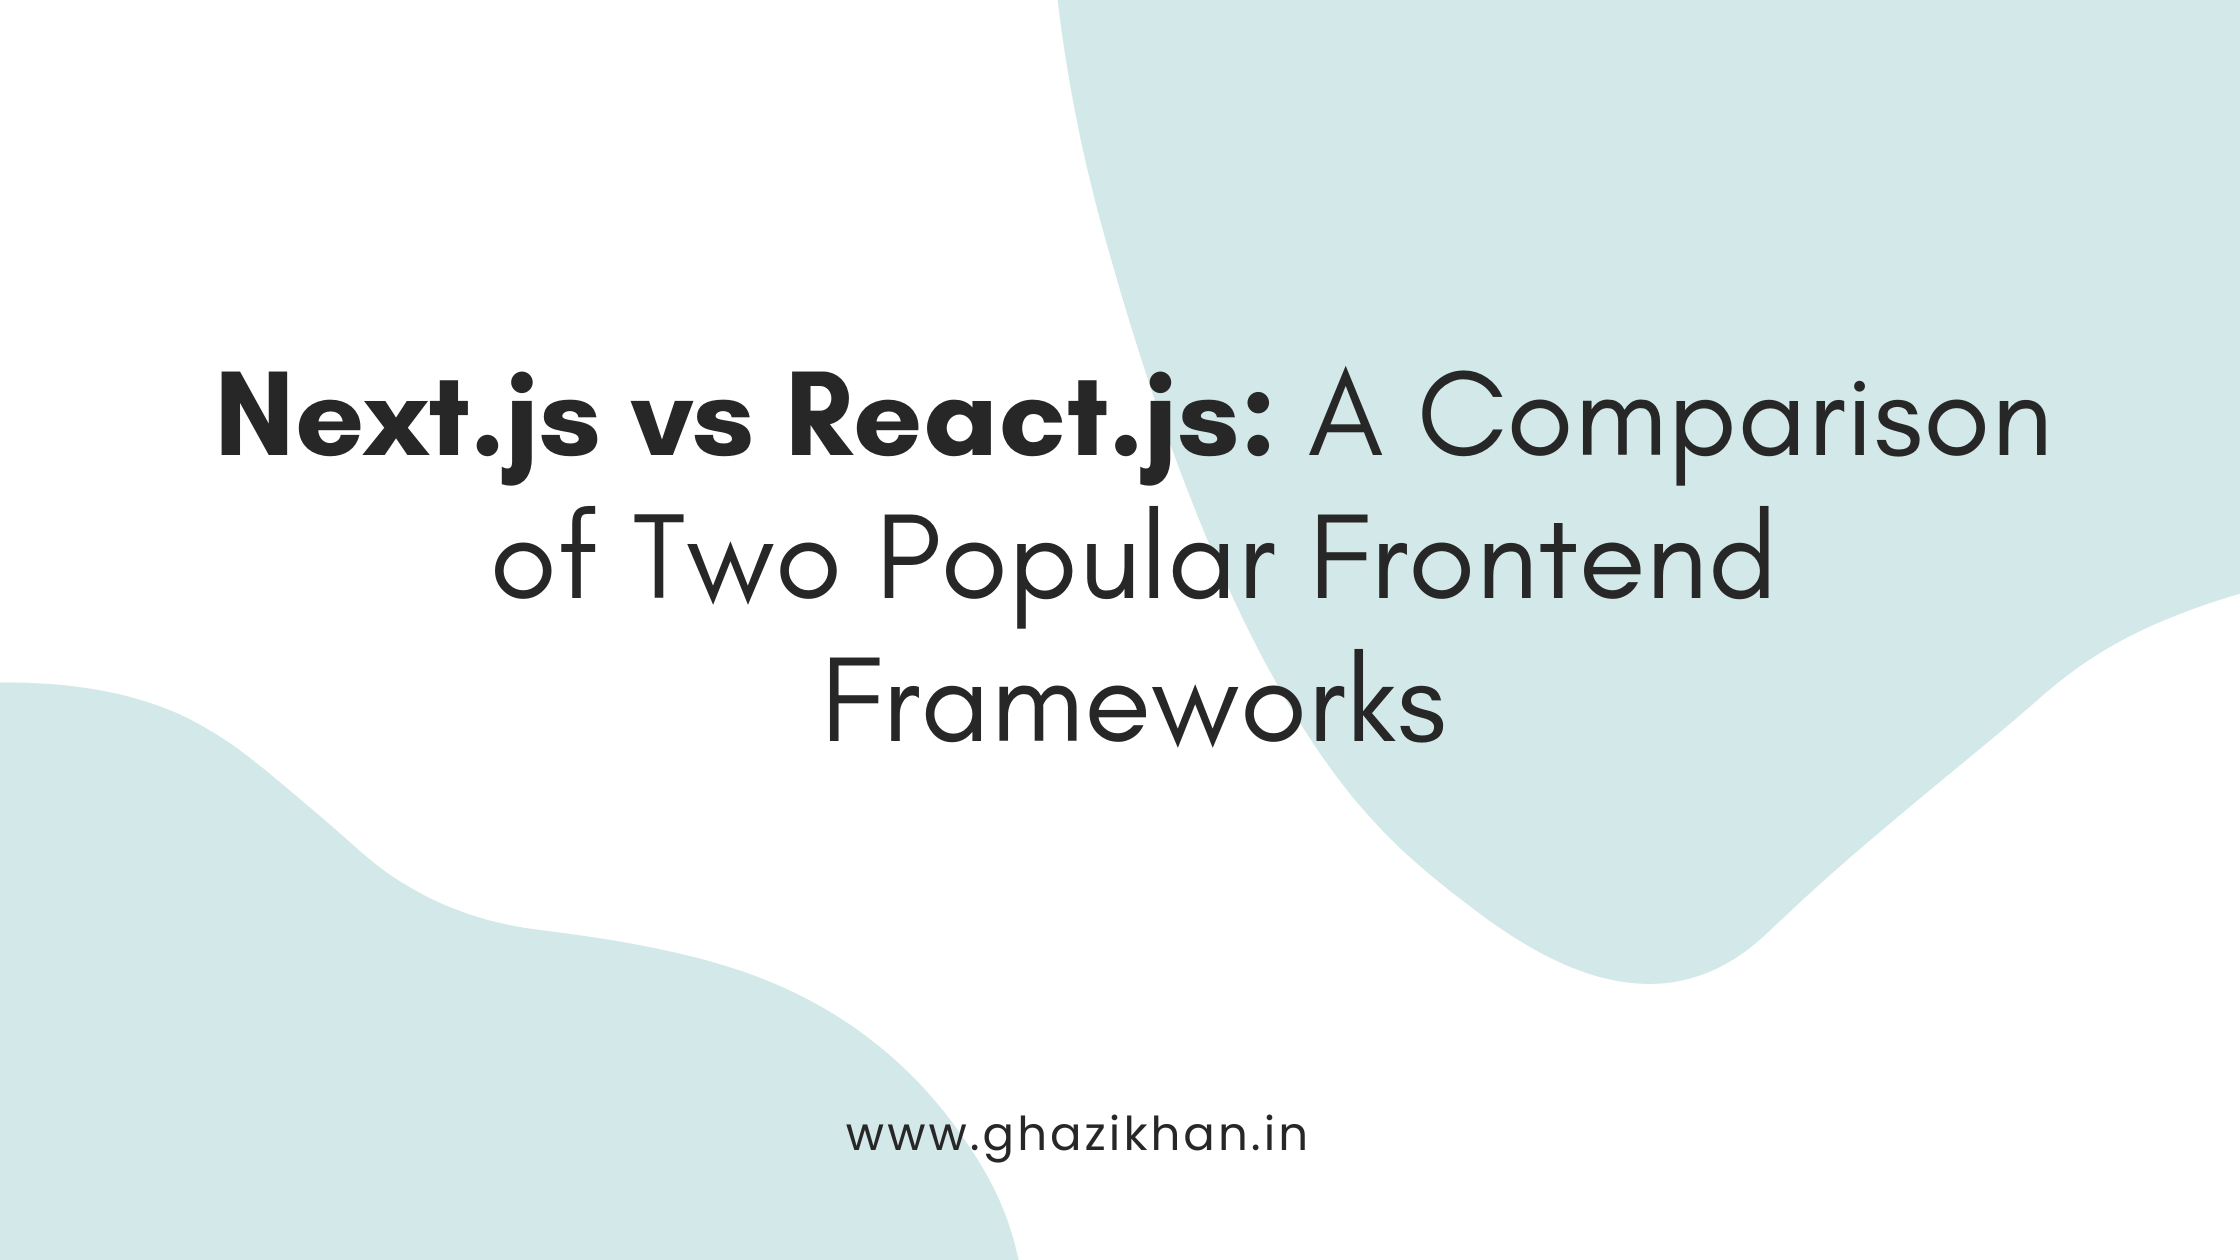 Next.js vs React.js: A Comparison of Two Popular Frontend Frameworks